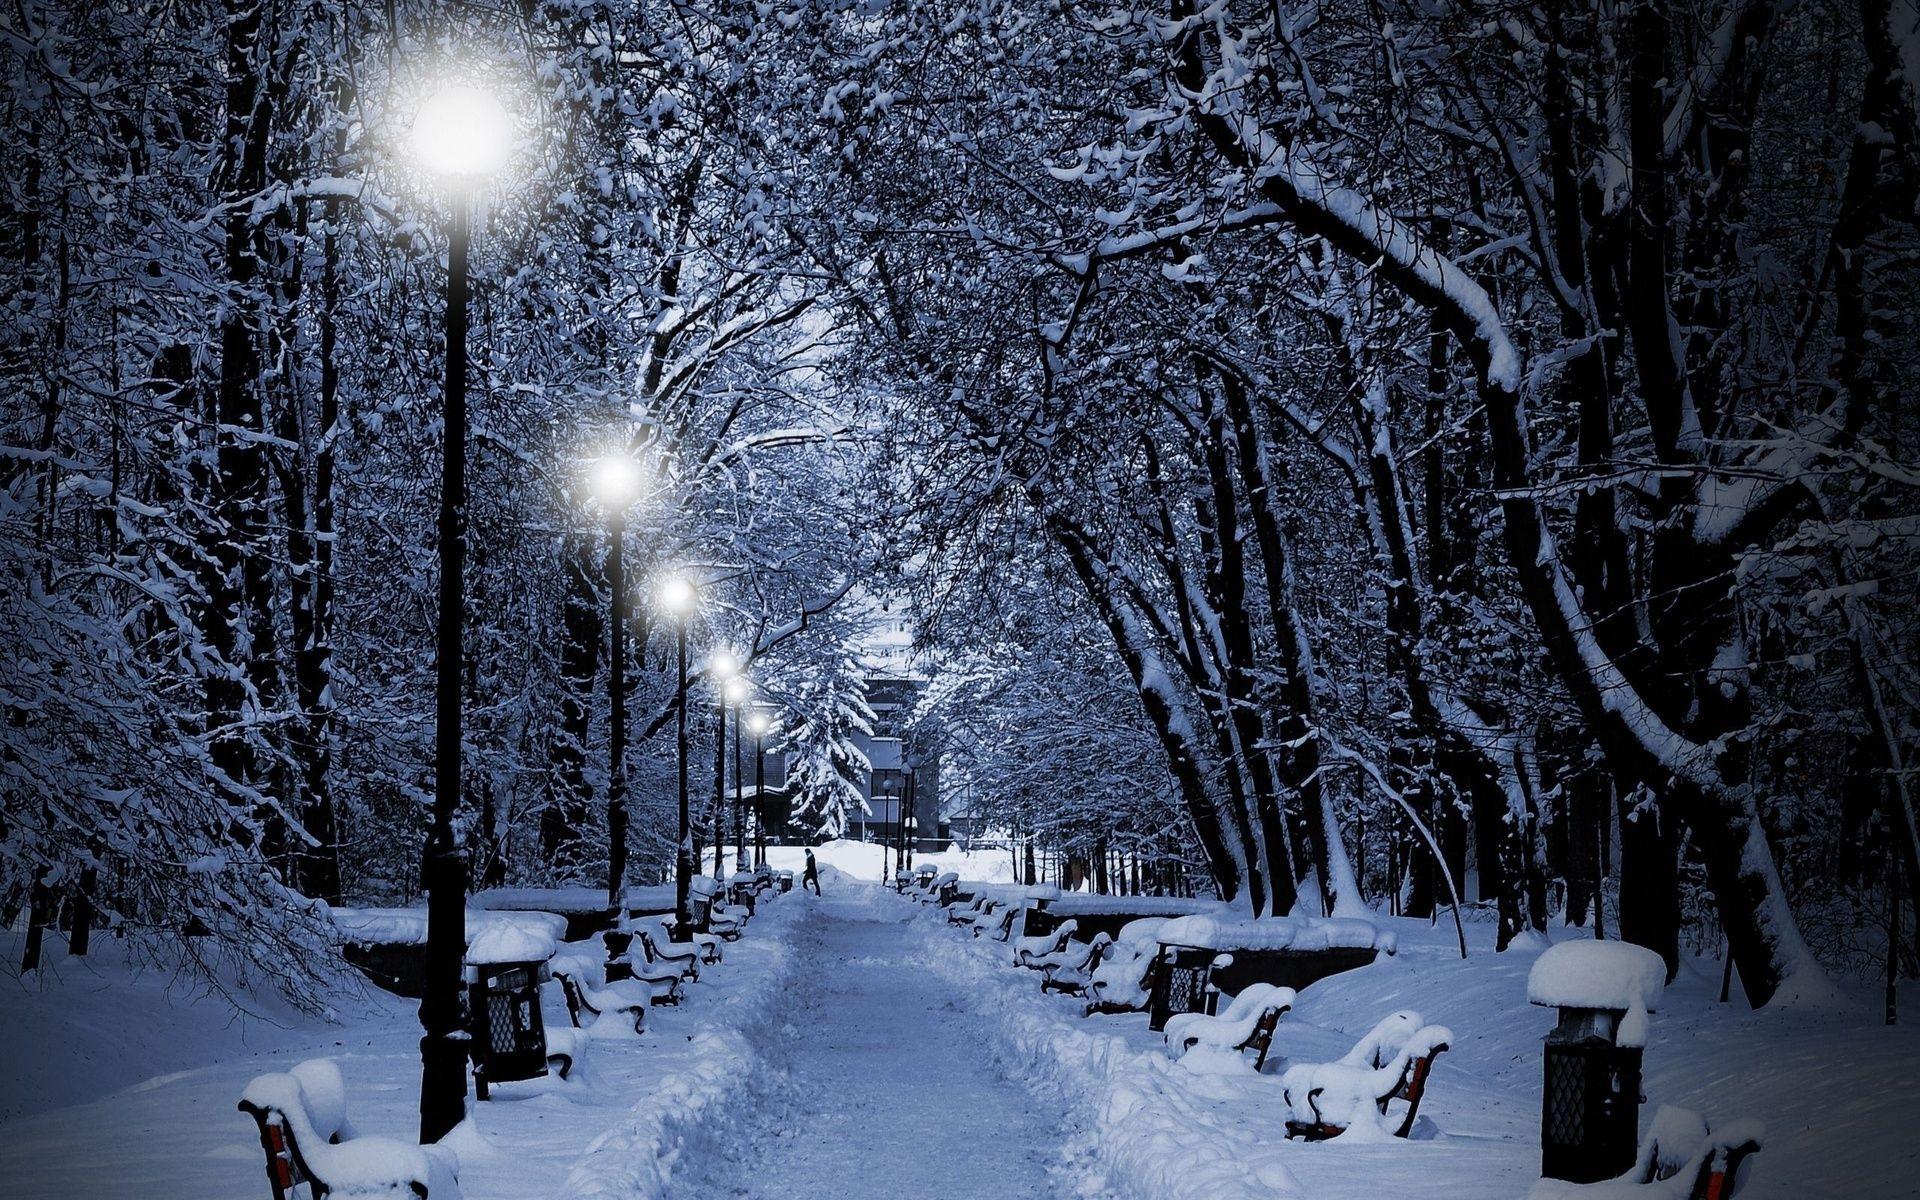 Night Winter Scenes Wallpaper. nature winter snow snowflakes snowing trees park white night. Winter landscape, Wallpaper iphone christmas, Winter wallpaper